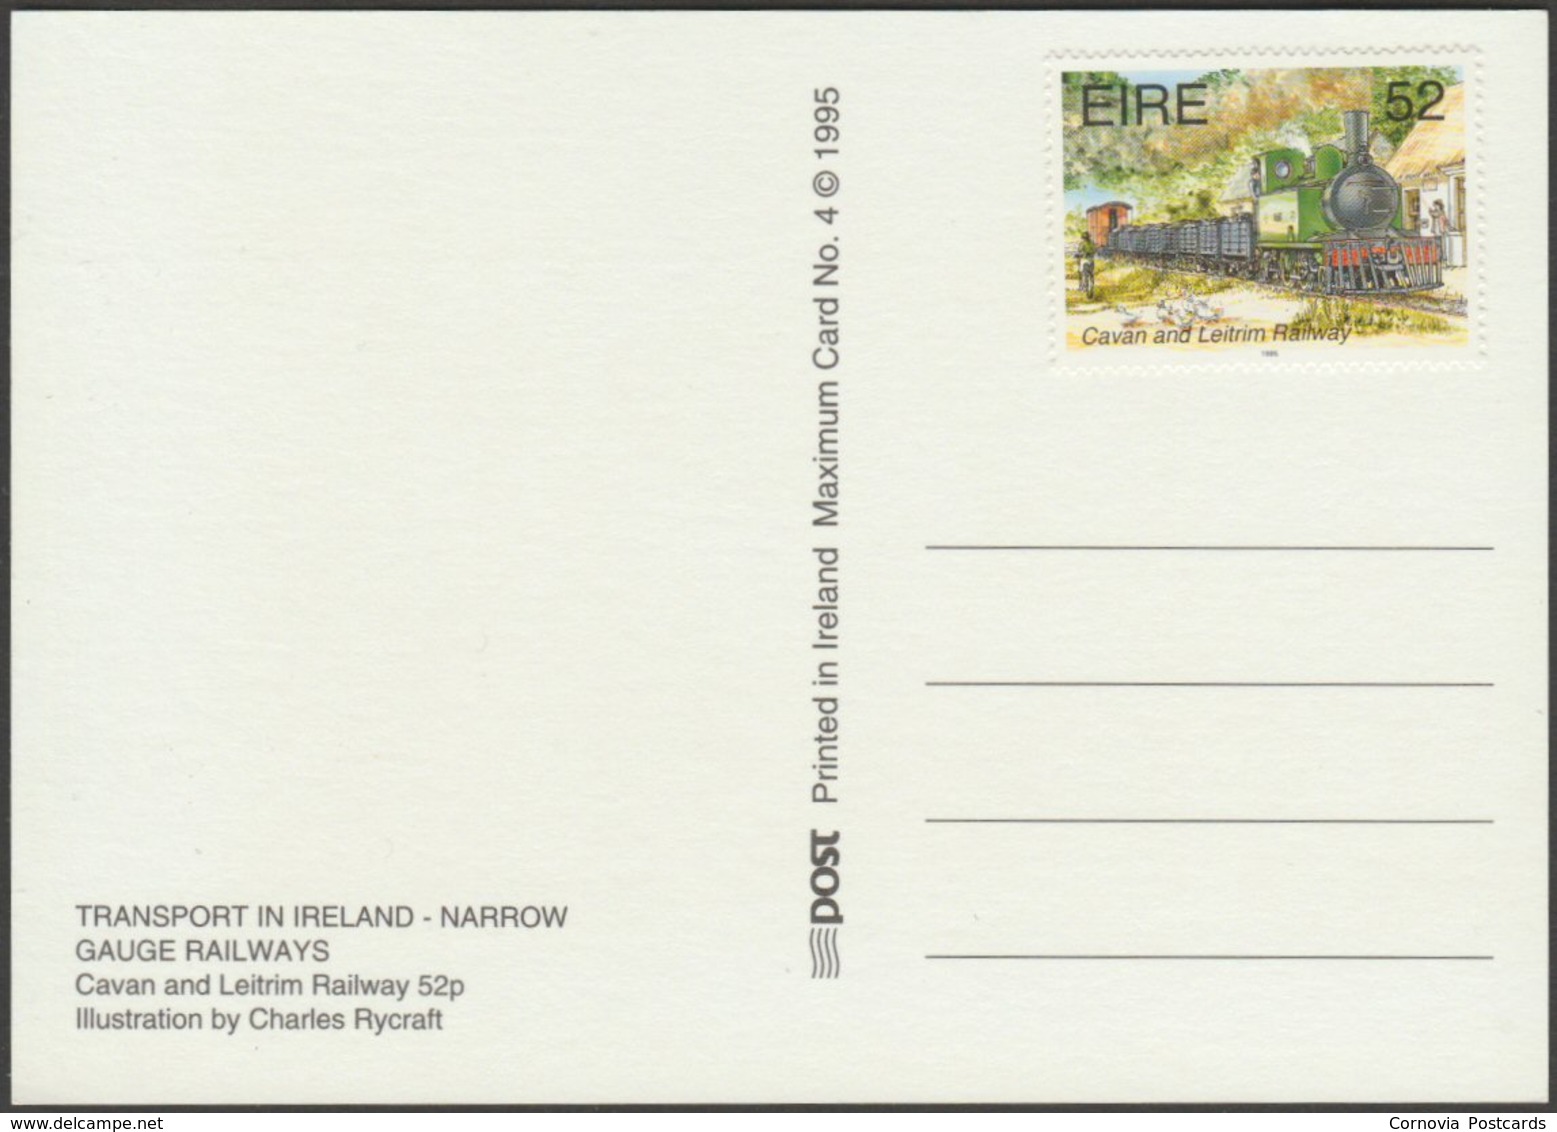 Charles Rycraft - Cavan And Leitrim Railway, 1995 - An Post Stamp Card - Trains